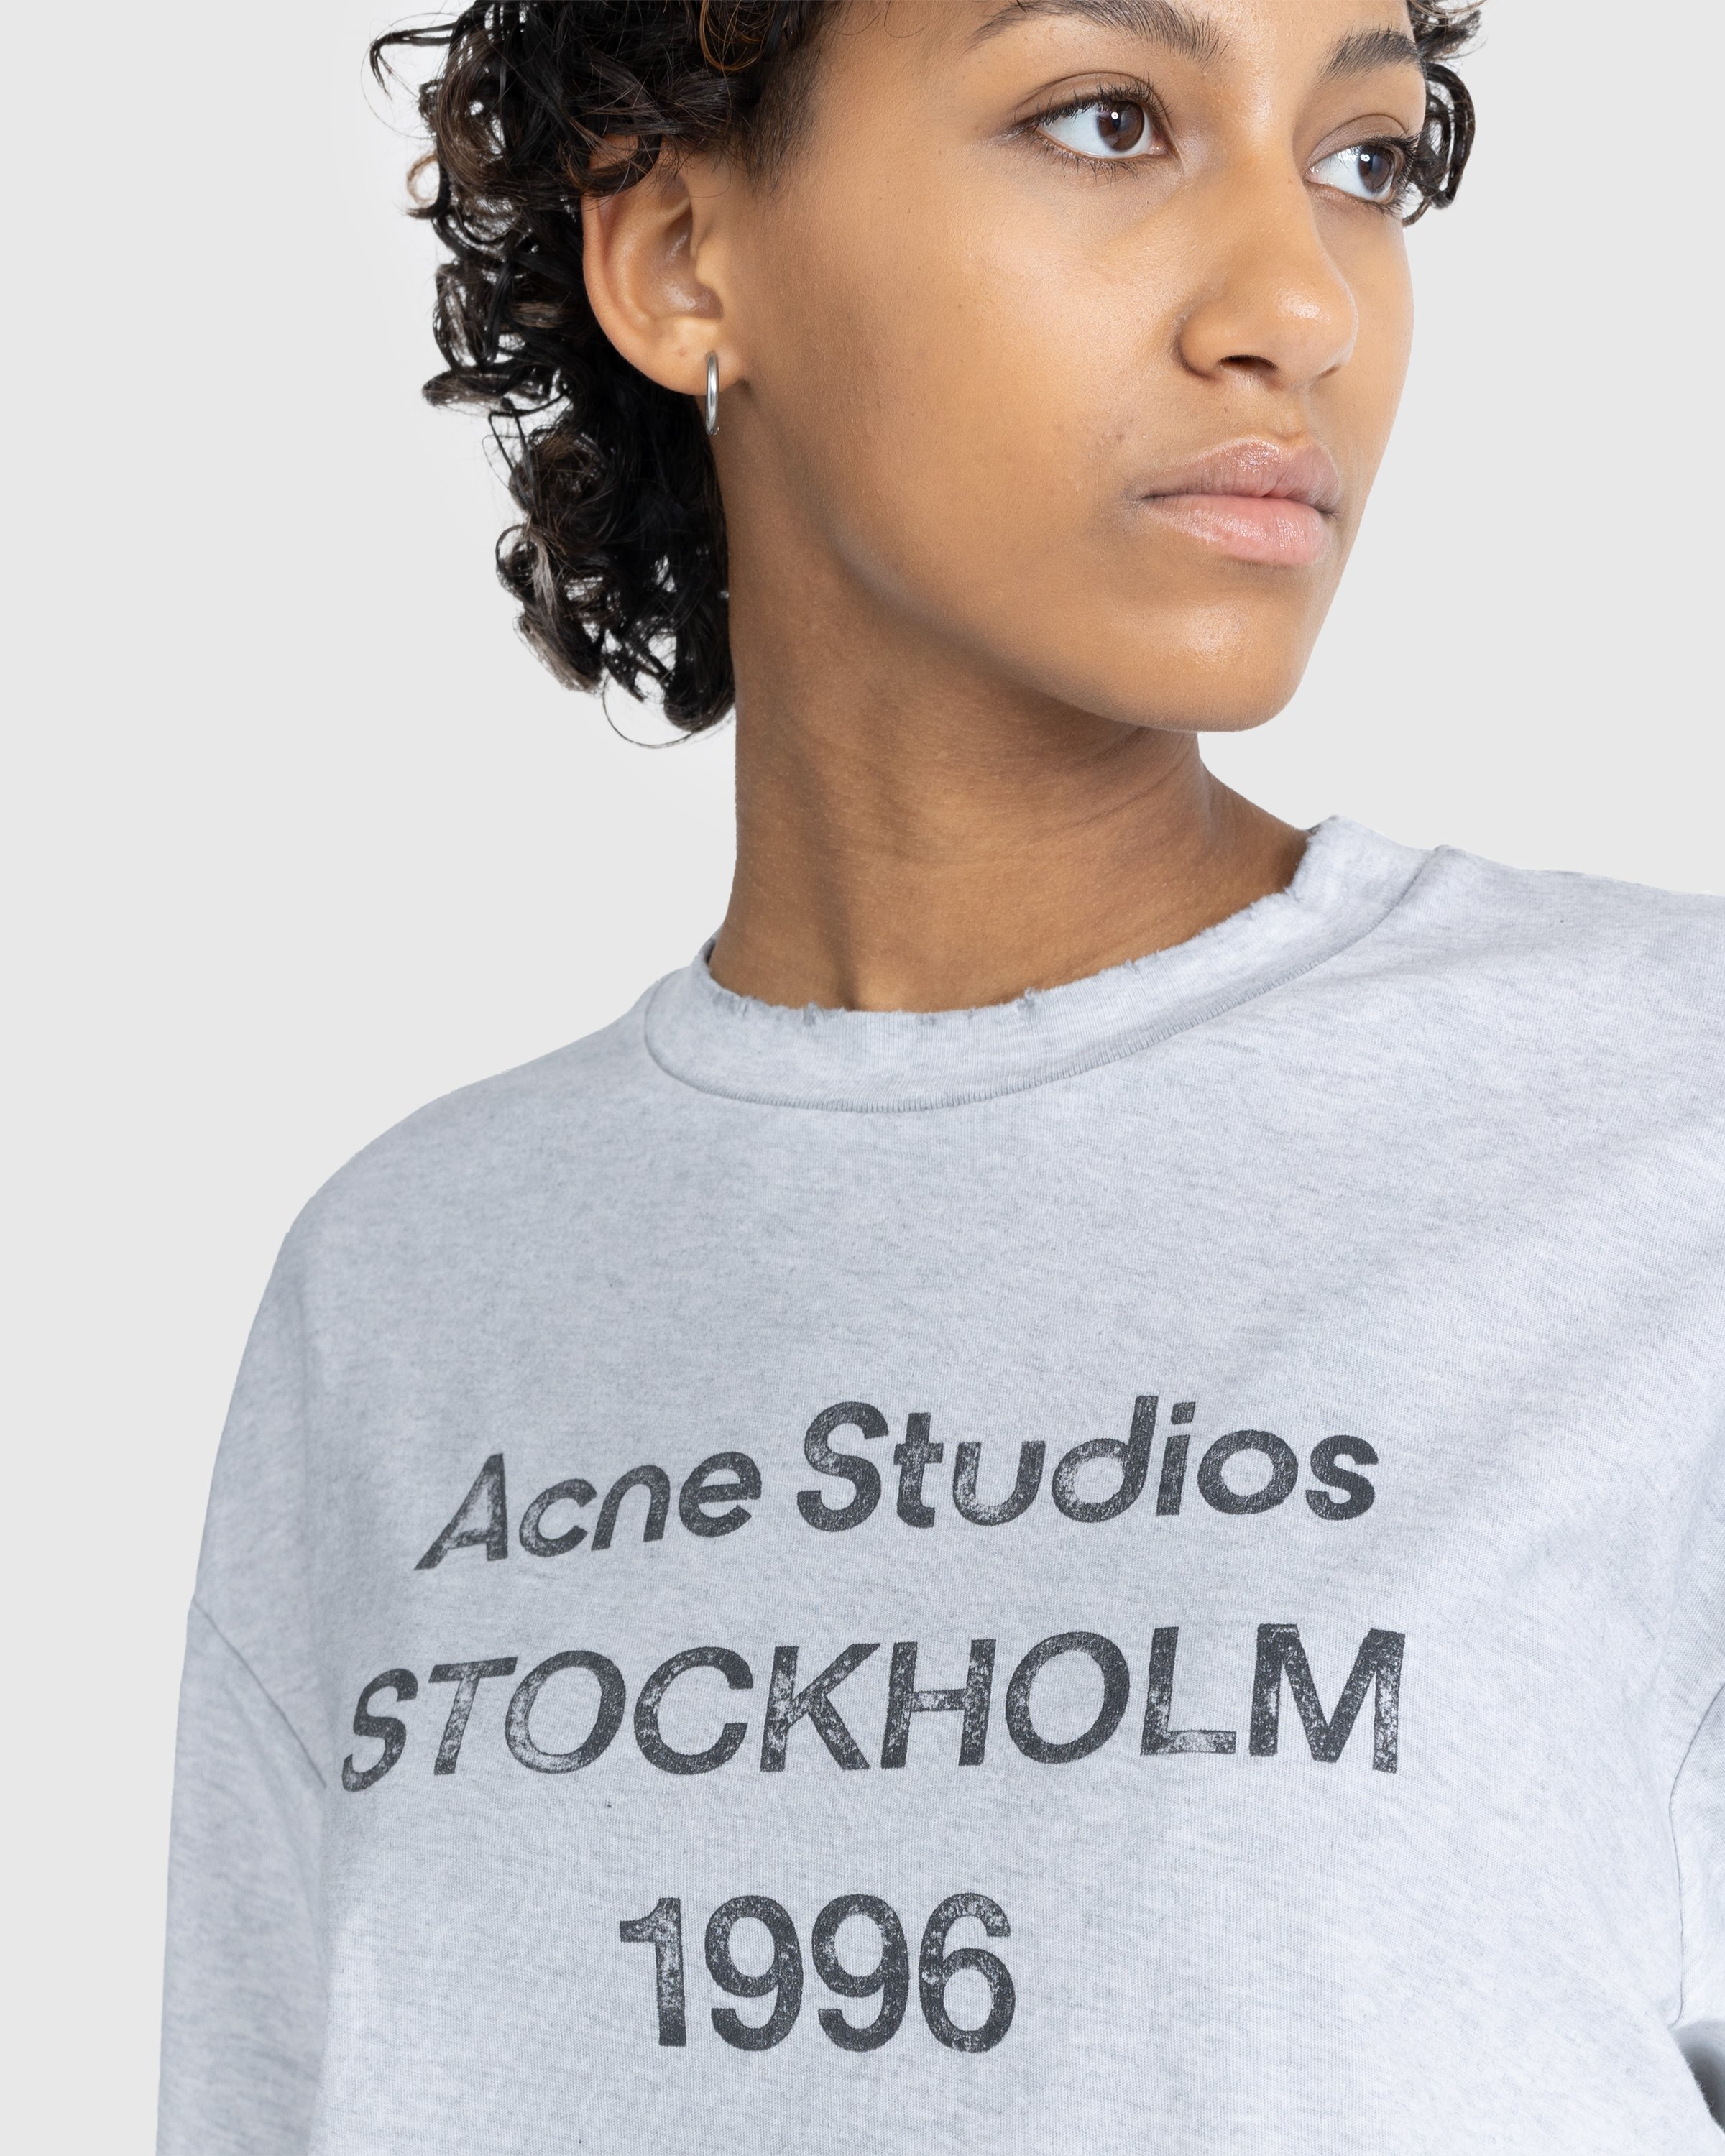 Acne Studios - Stockholm 1996 T-Shirt Grey - Clothing - Grey - Image 5